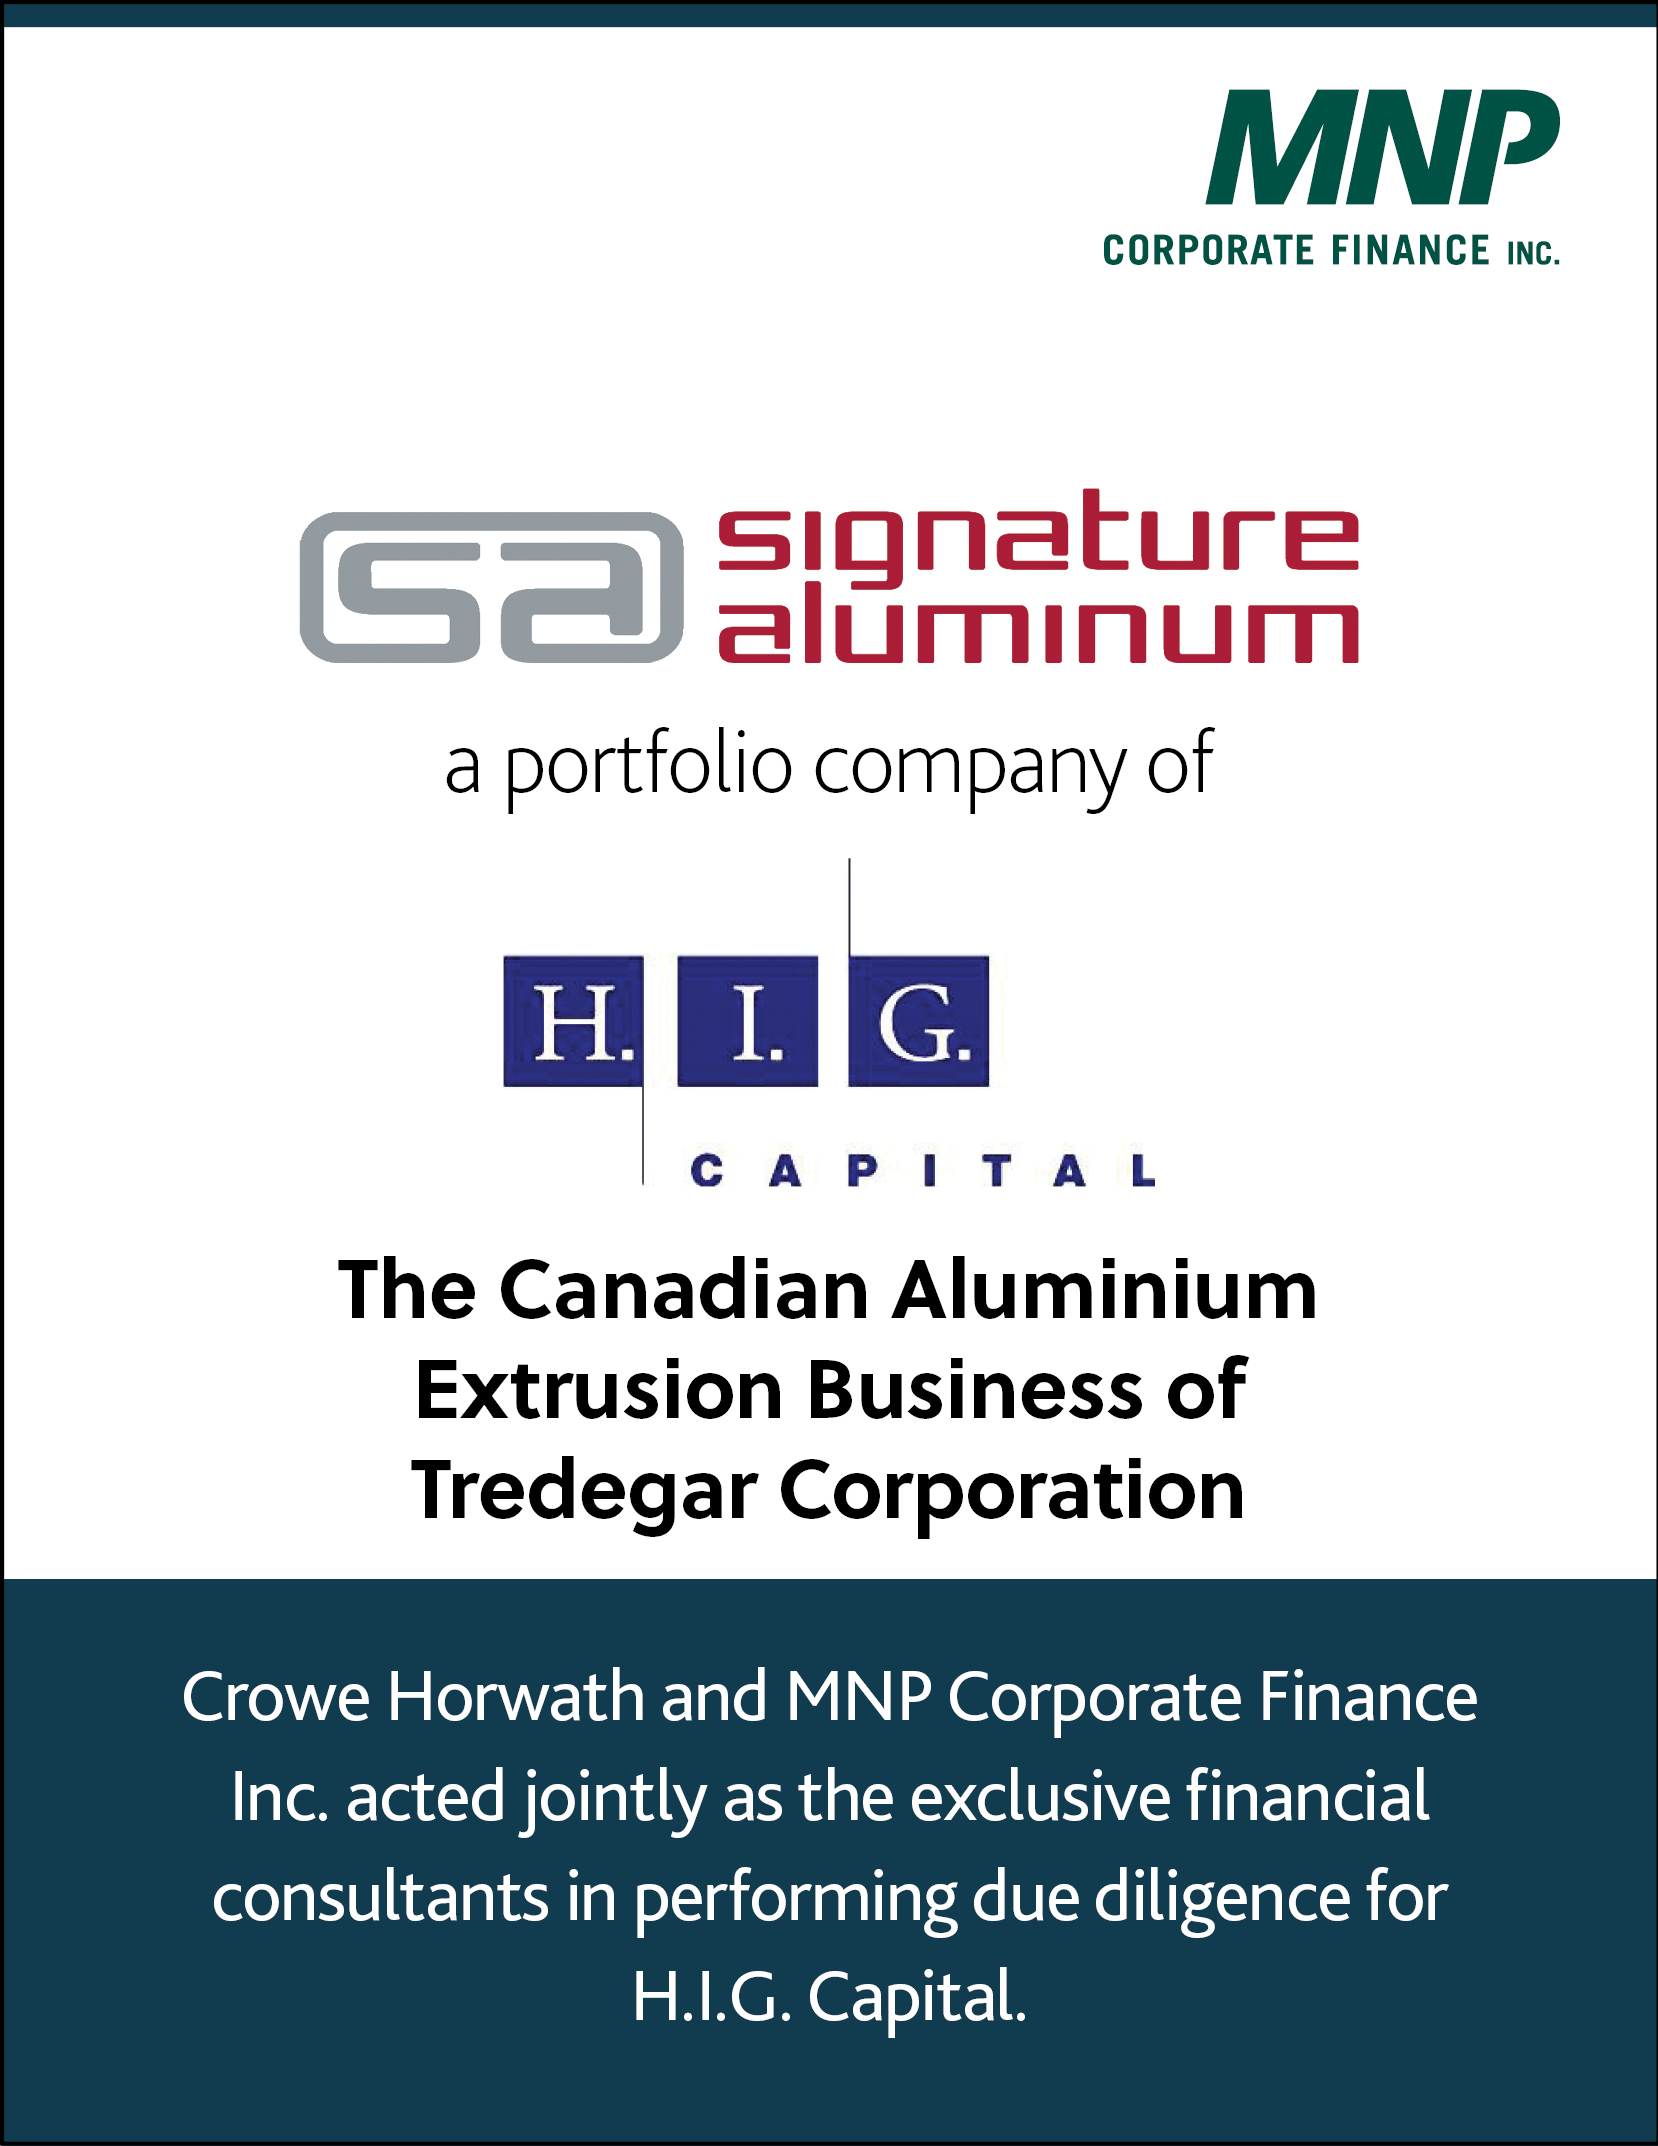 Signature aluminum a portfolio company of H.I.G. Capital The Canadian Aluminum Extrusion Business of Tredegar Corporation. 